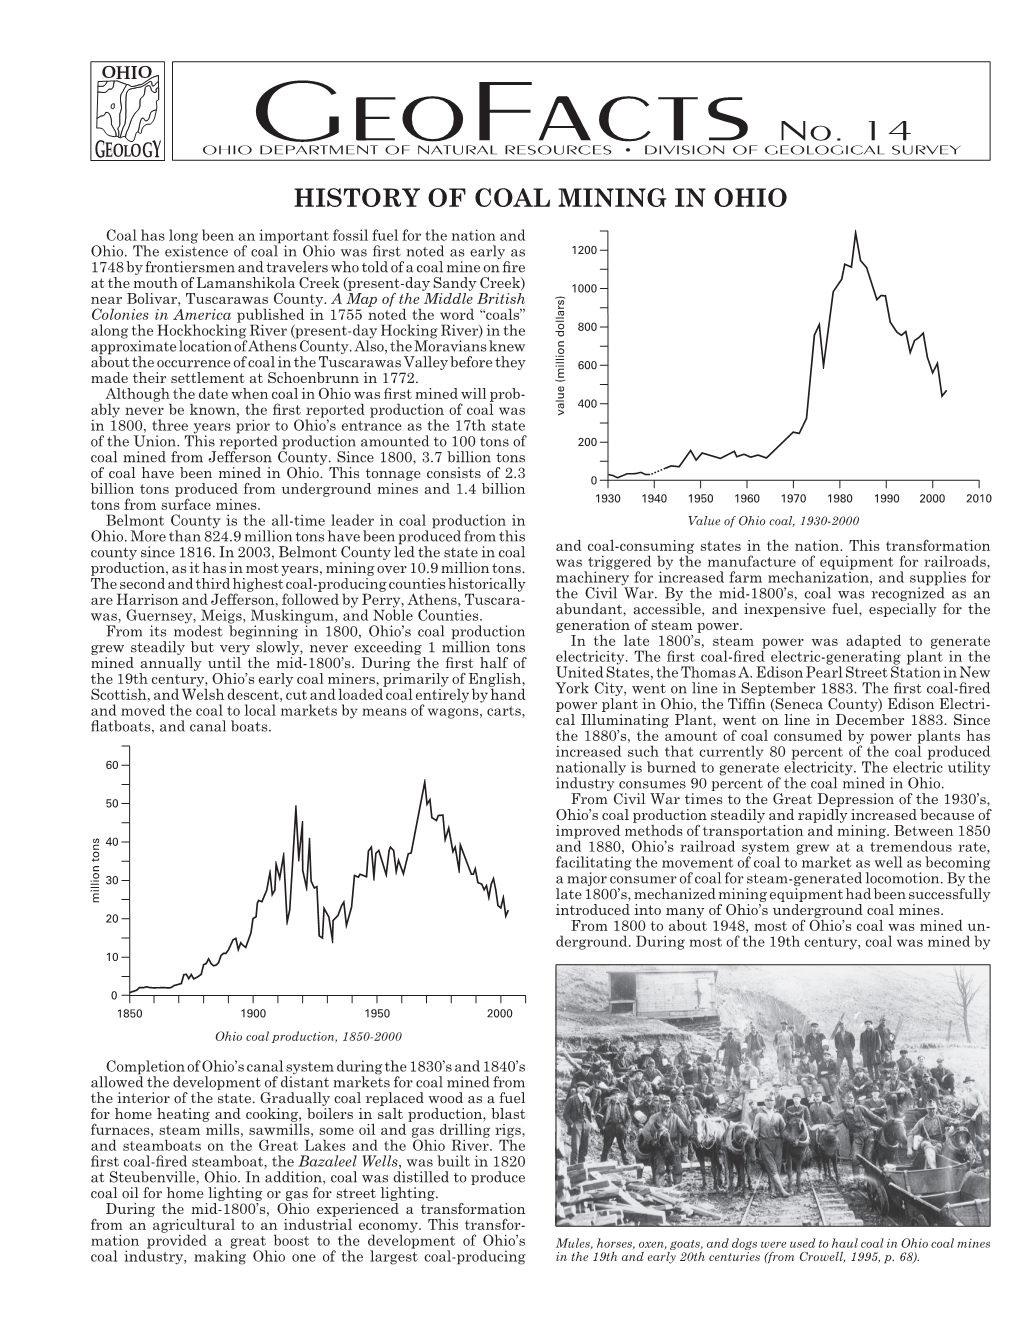 History of Coal Mining in Ohio